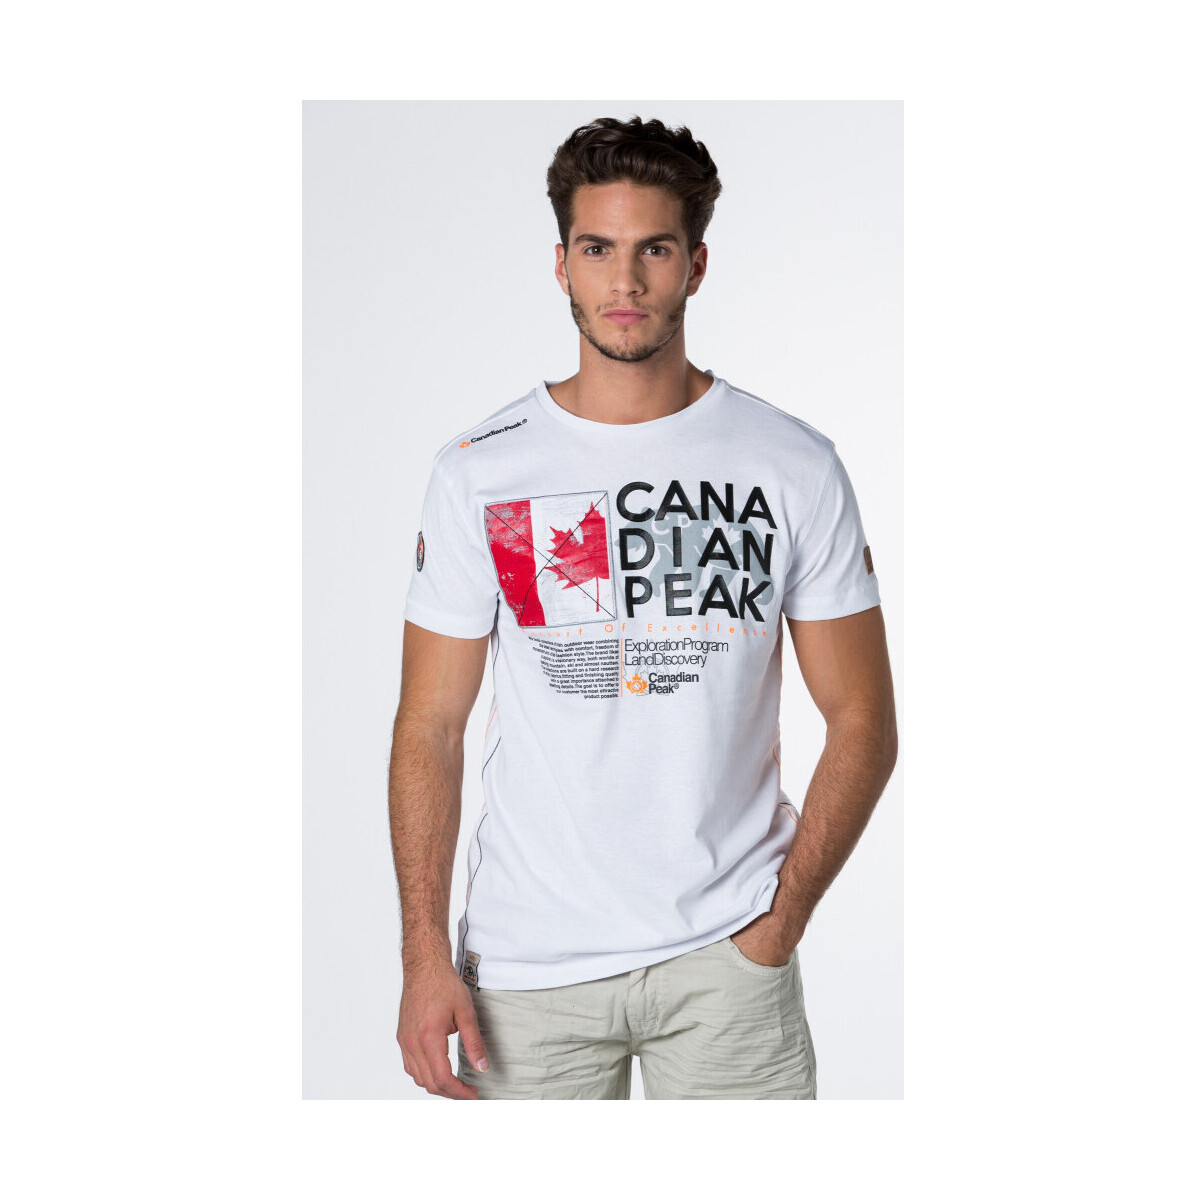 Vêtements Homme VANS Mixed Up Gingham Cropped Crew Sweatshirt addict marshmallow Damen Weiß Canadian Peak JILTORD t-shirt addict pour homme Blanc